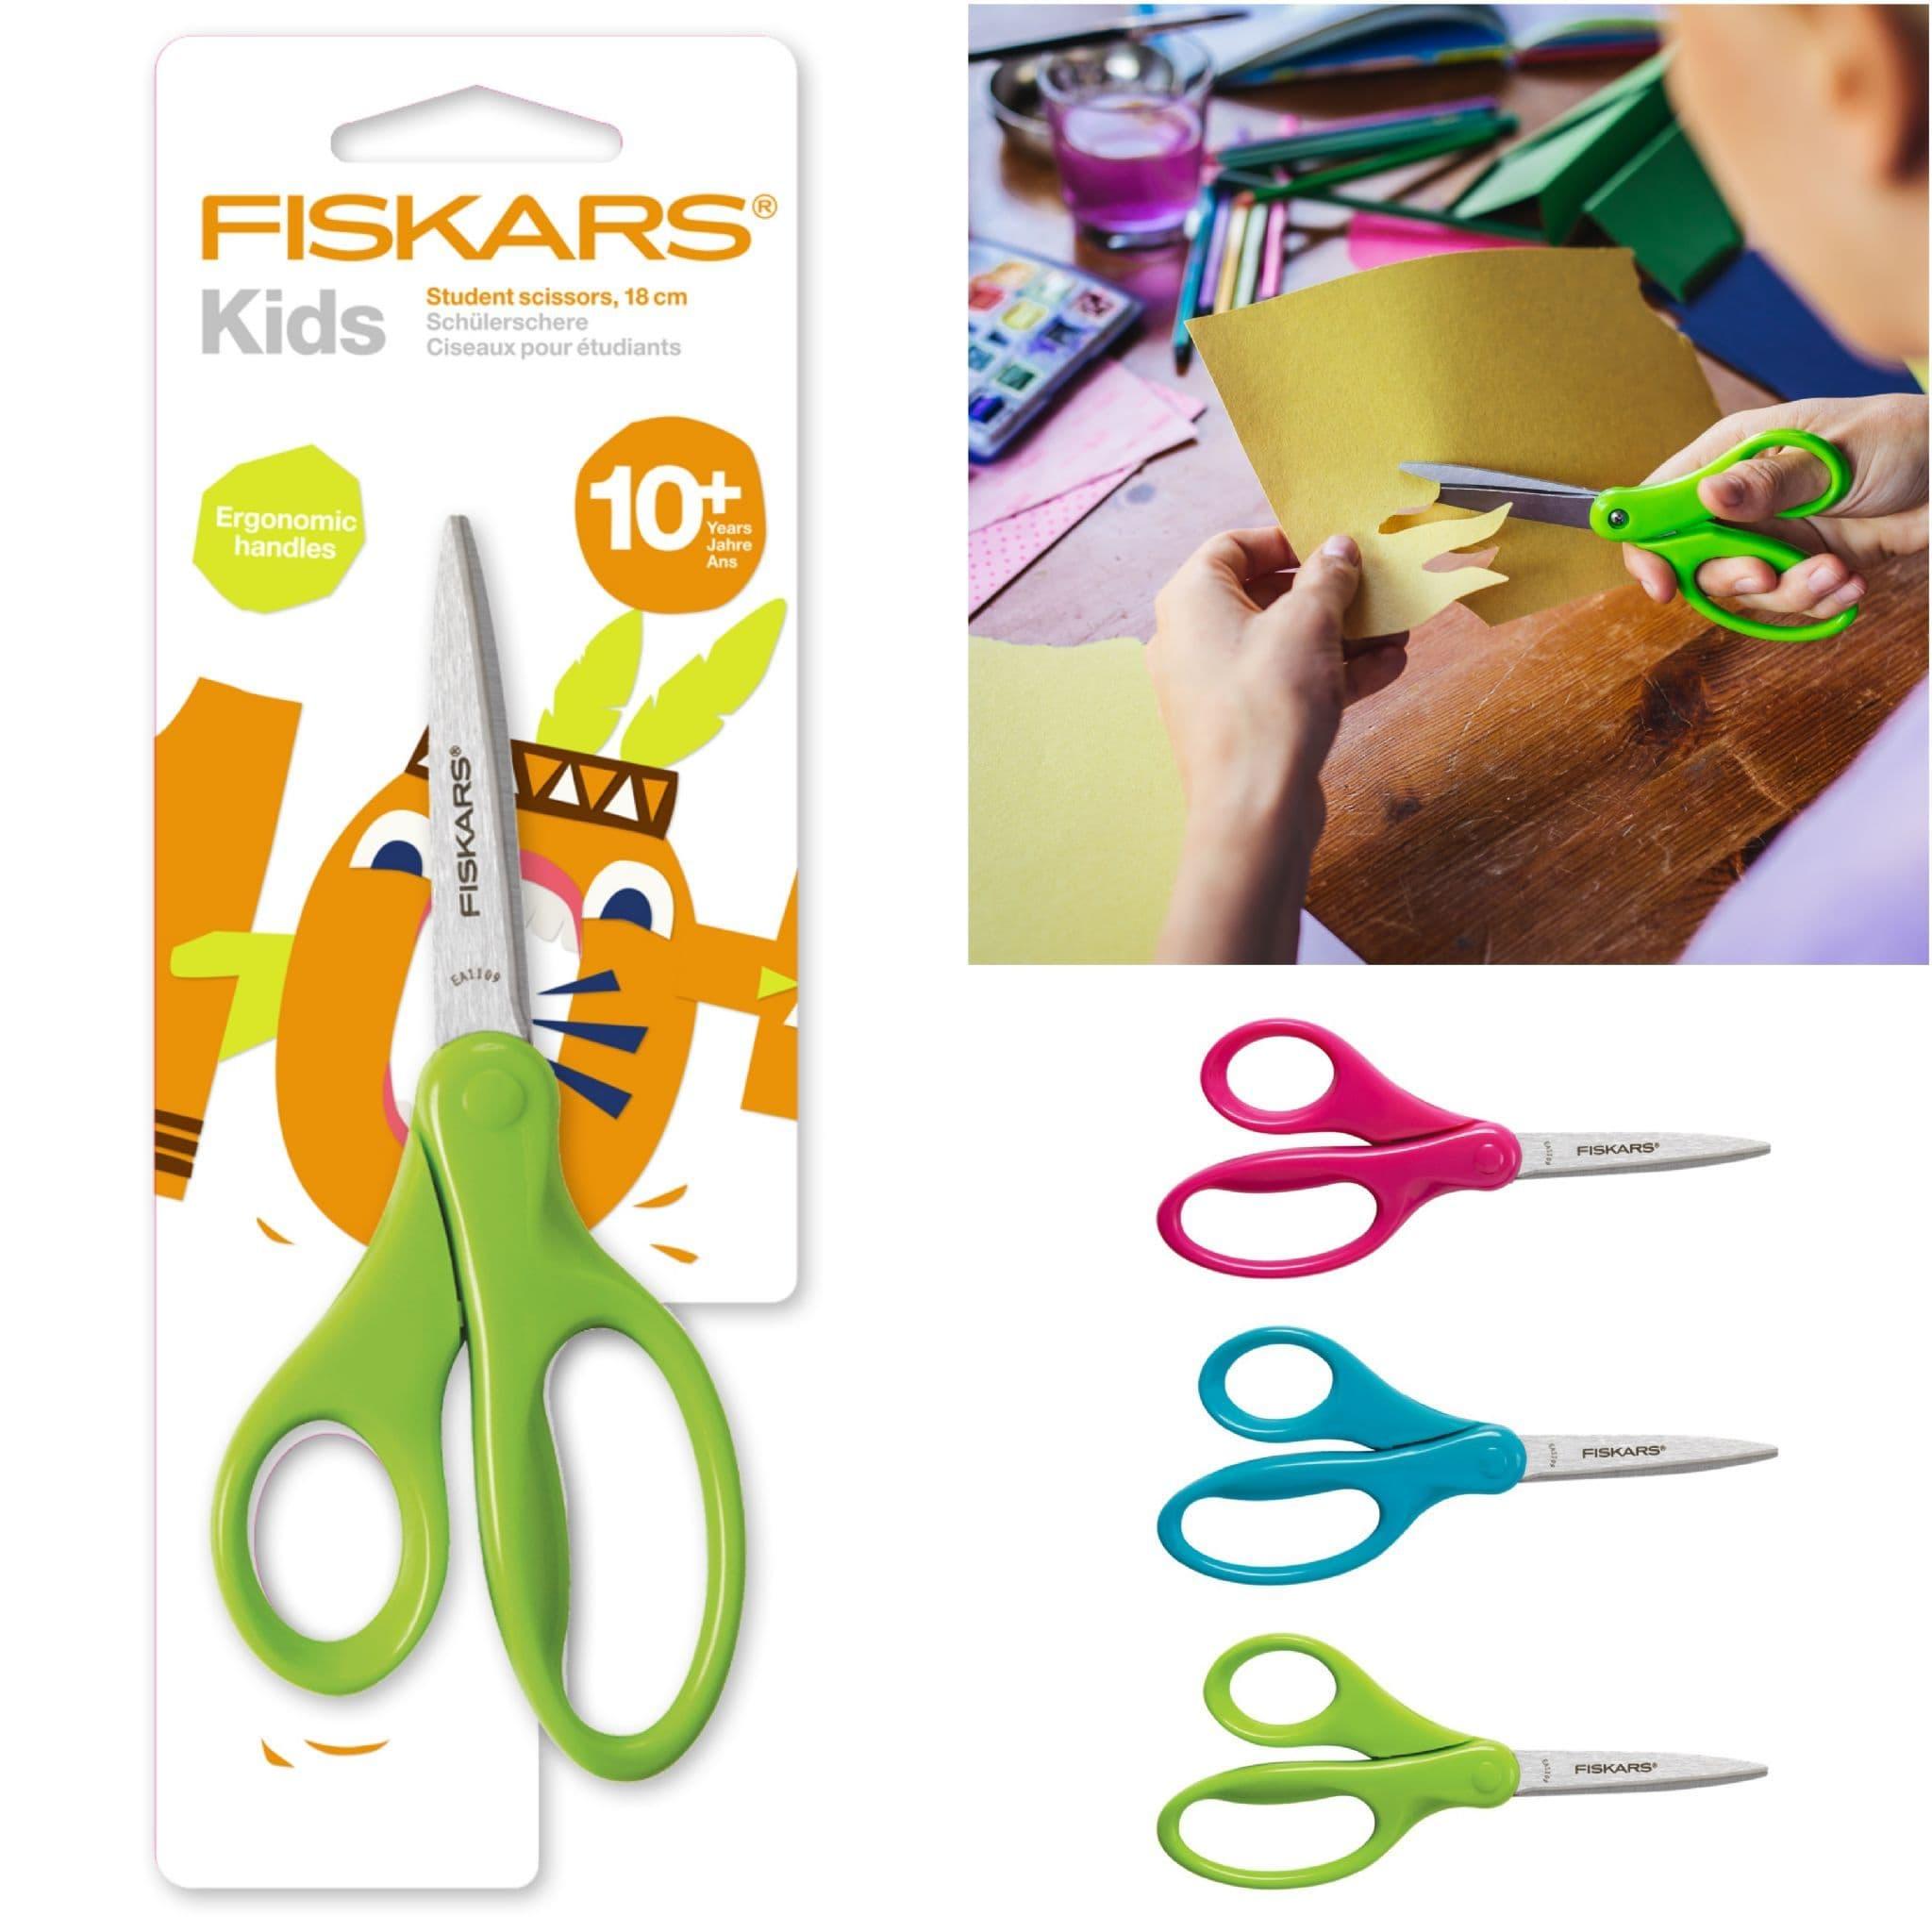 Fiskars Student Scissors - The Office Point